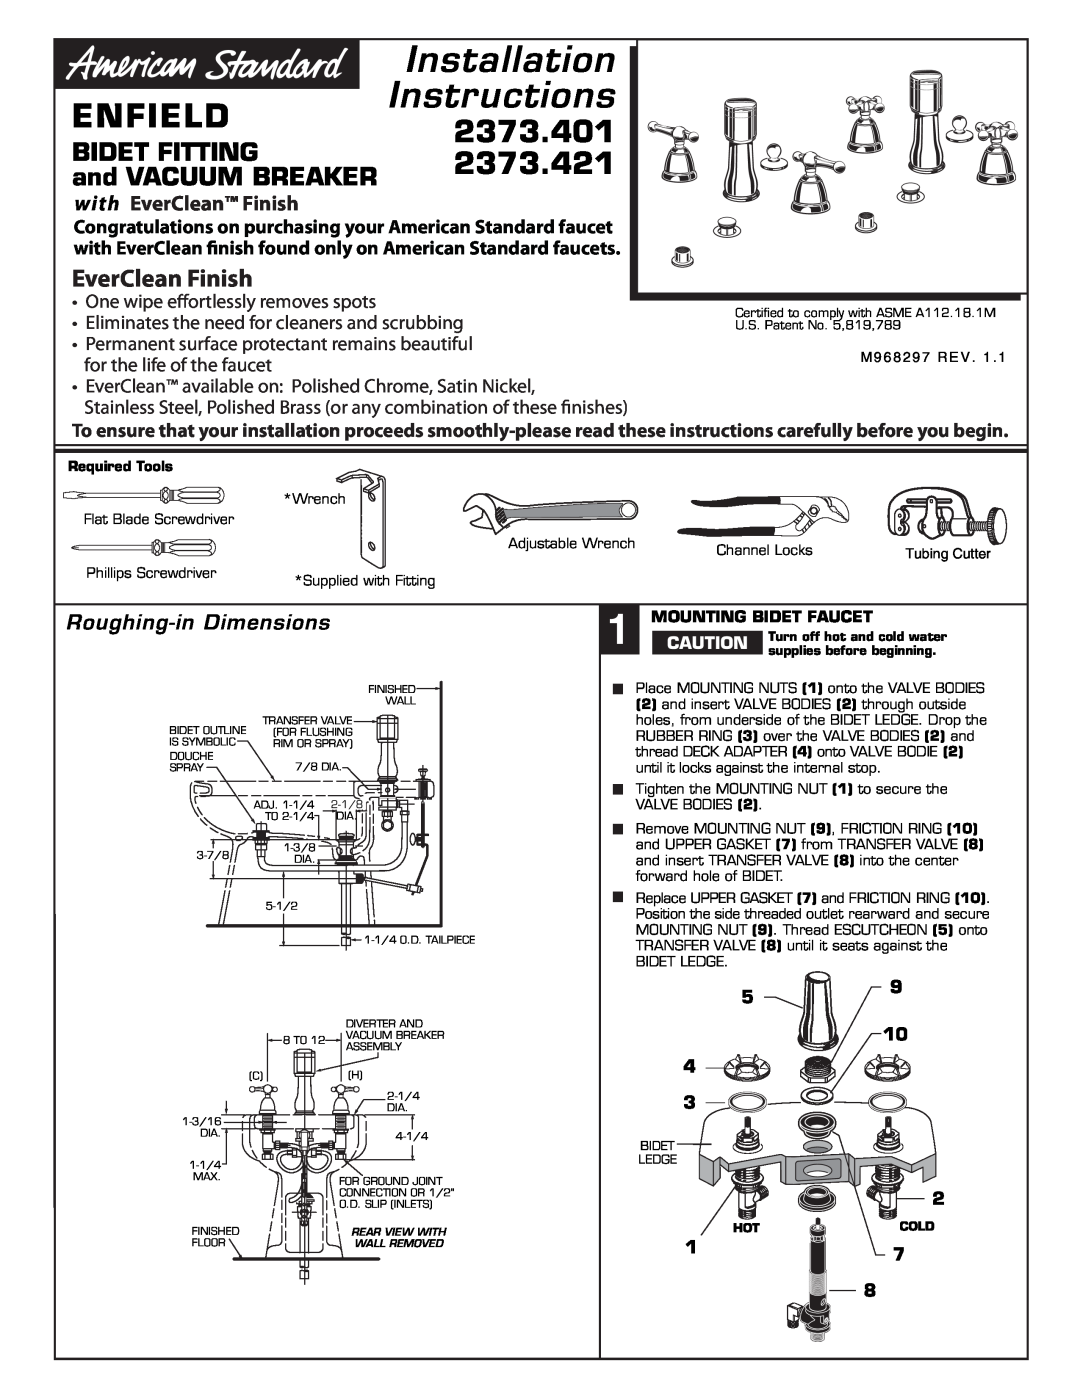 American Standard 2373.401 installation instructions Installation, Instructions, Enfield, 2373.421, Bidet Fitting 